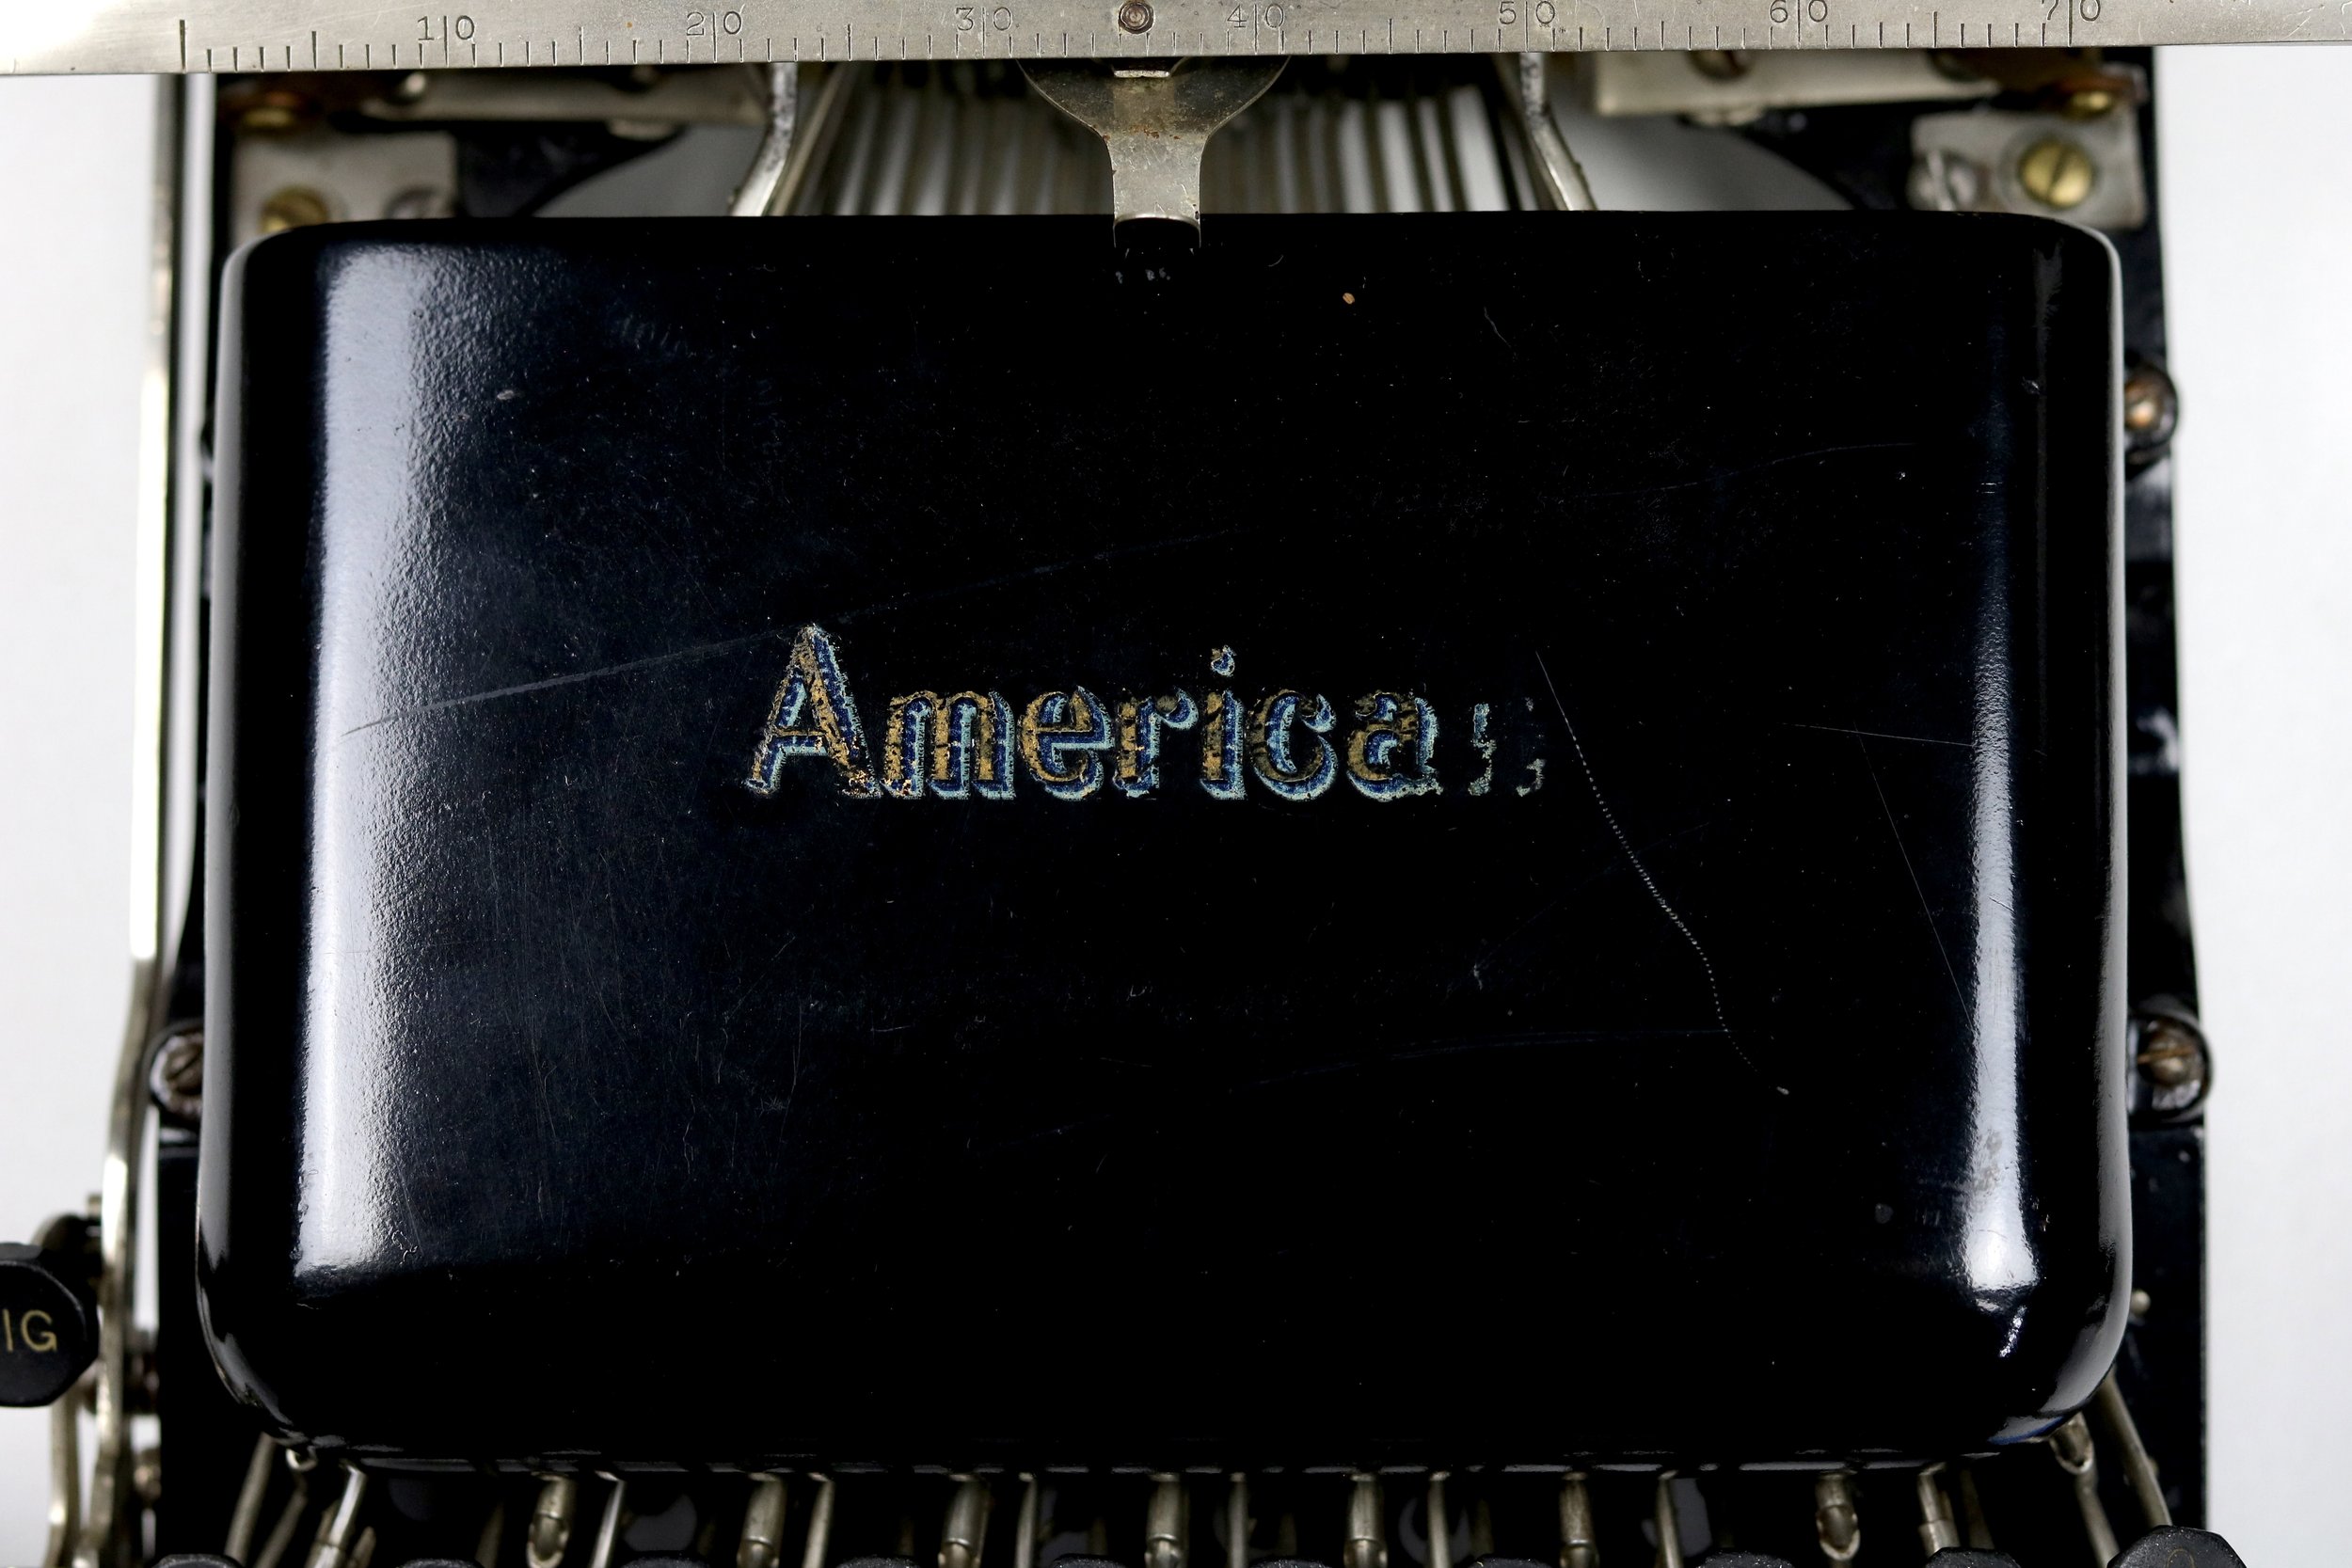 The American No.8 Typewriter - The American Typewriter Co. 265 Broadway, new York